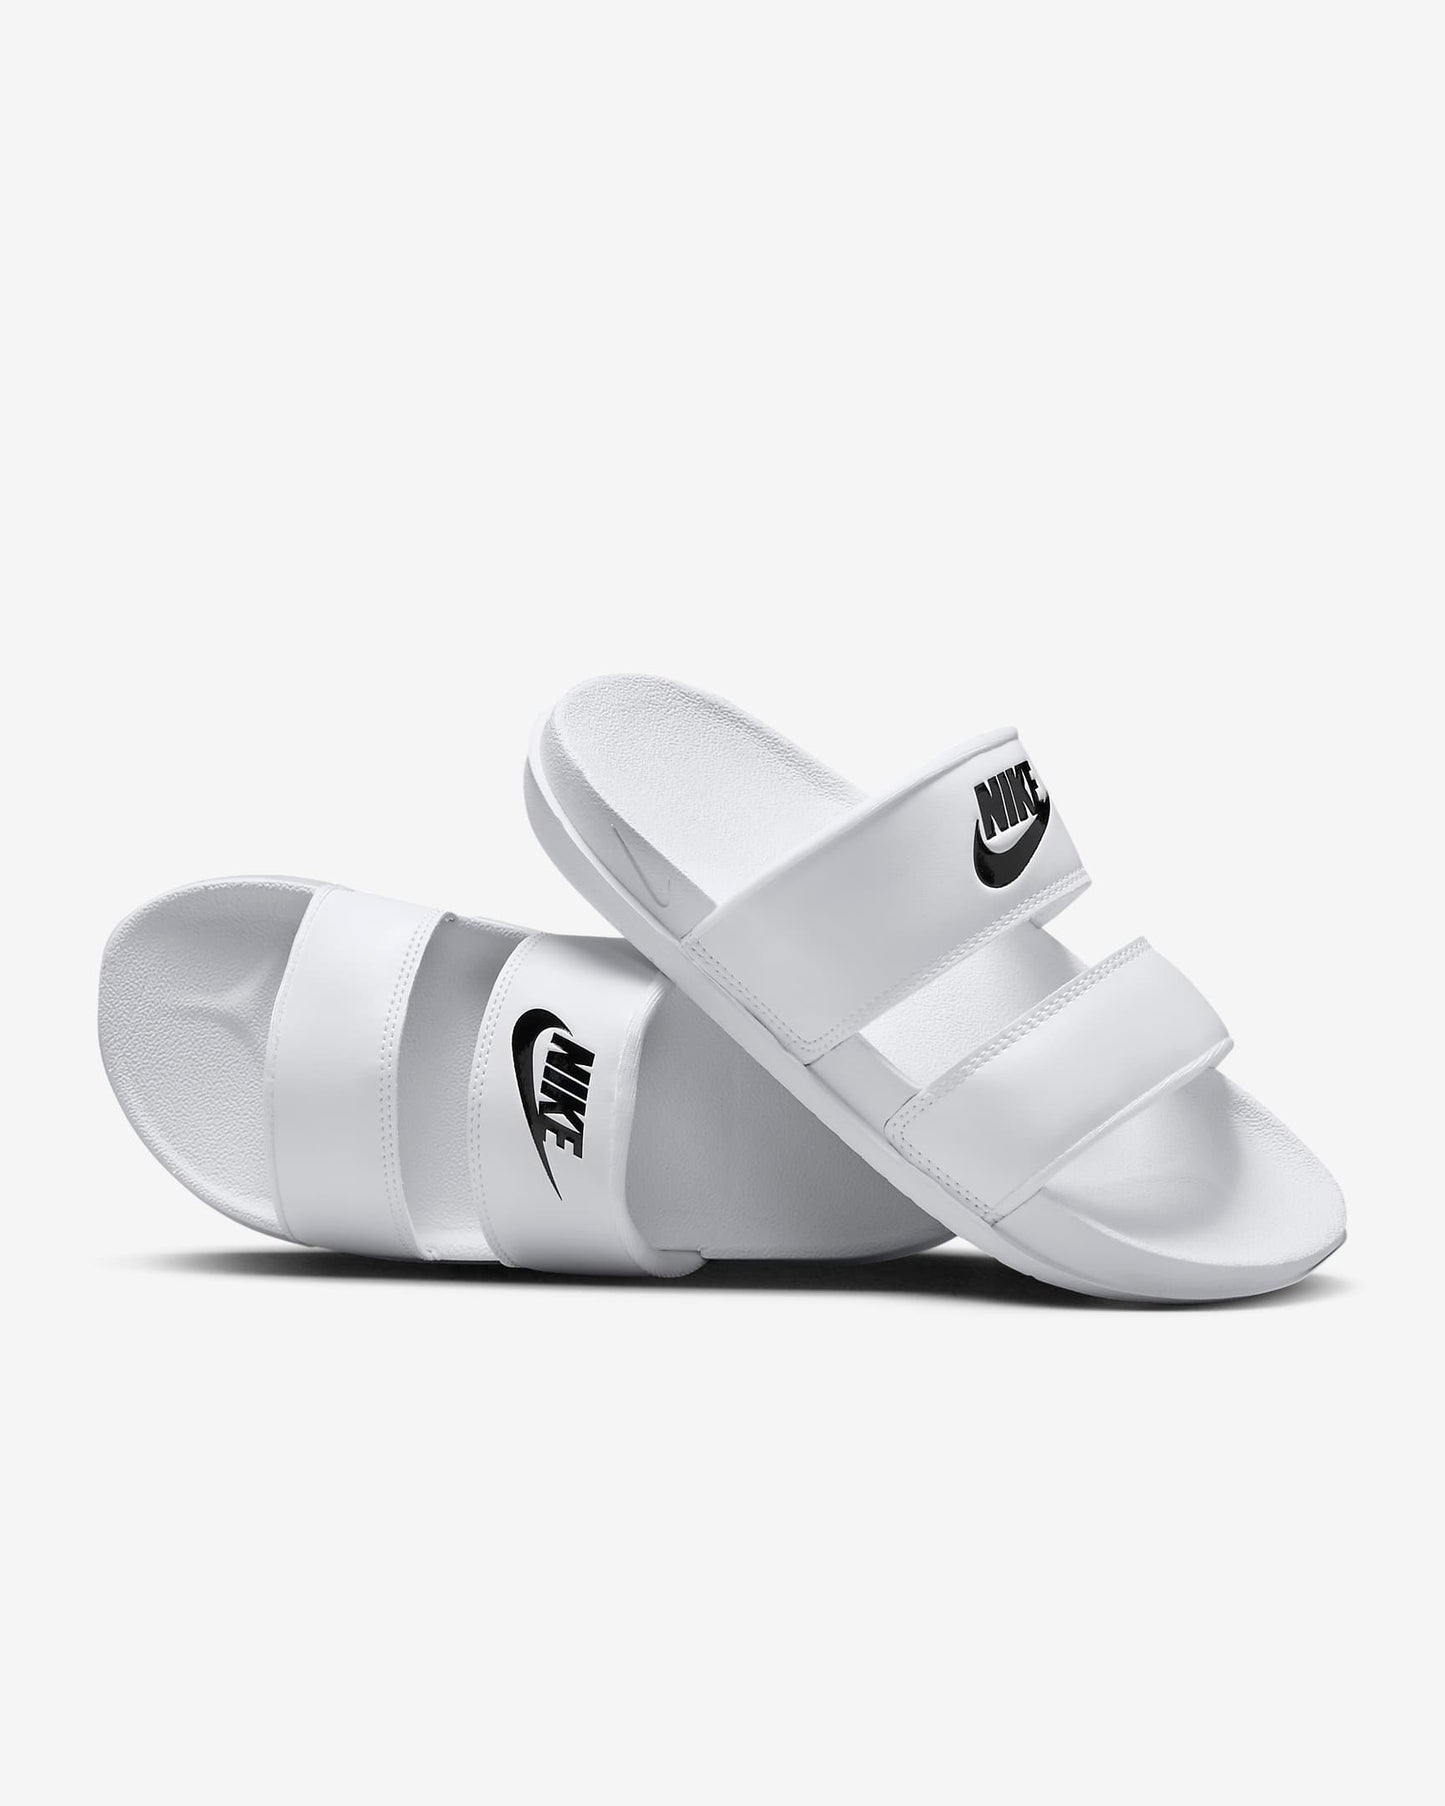 Nike Women's Offcourt Duo Slides, White/White/Black